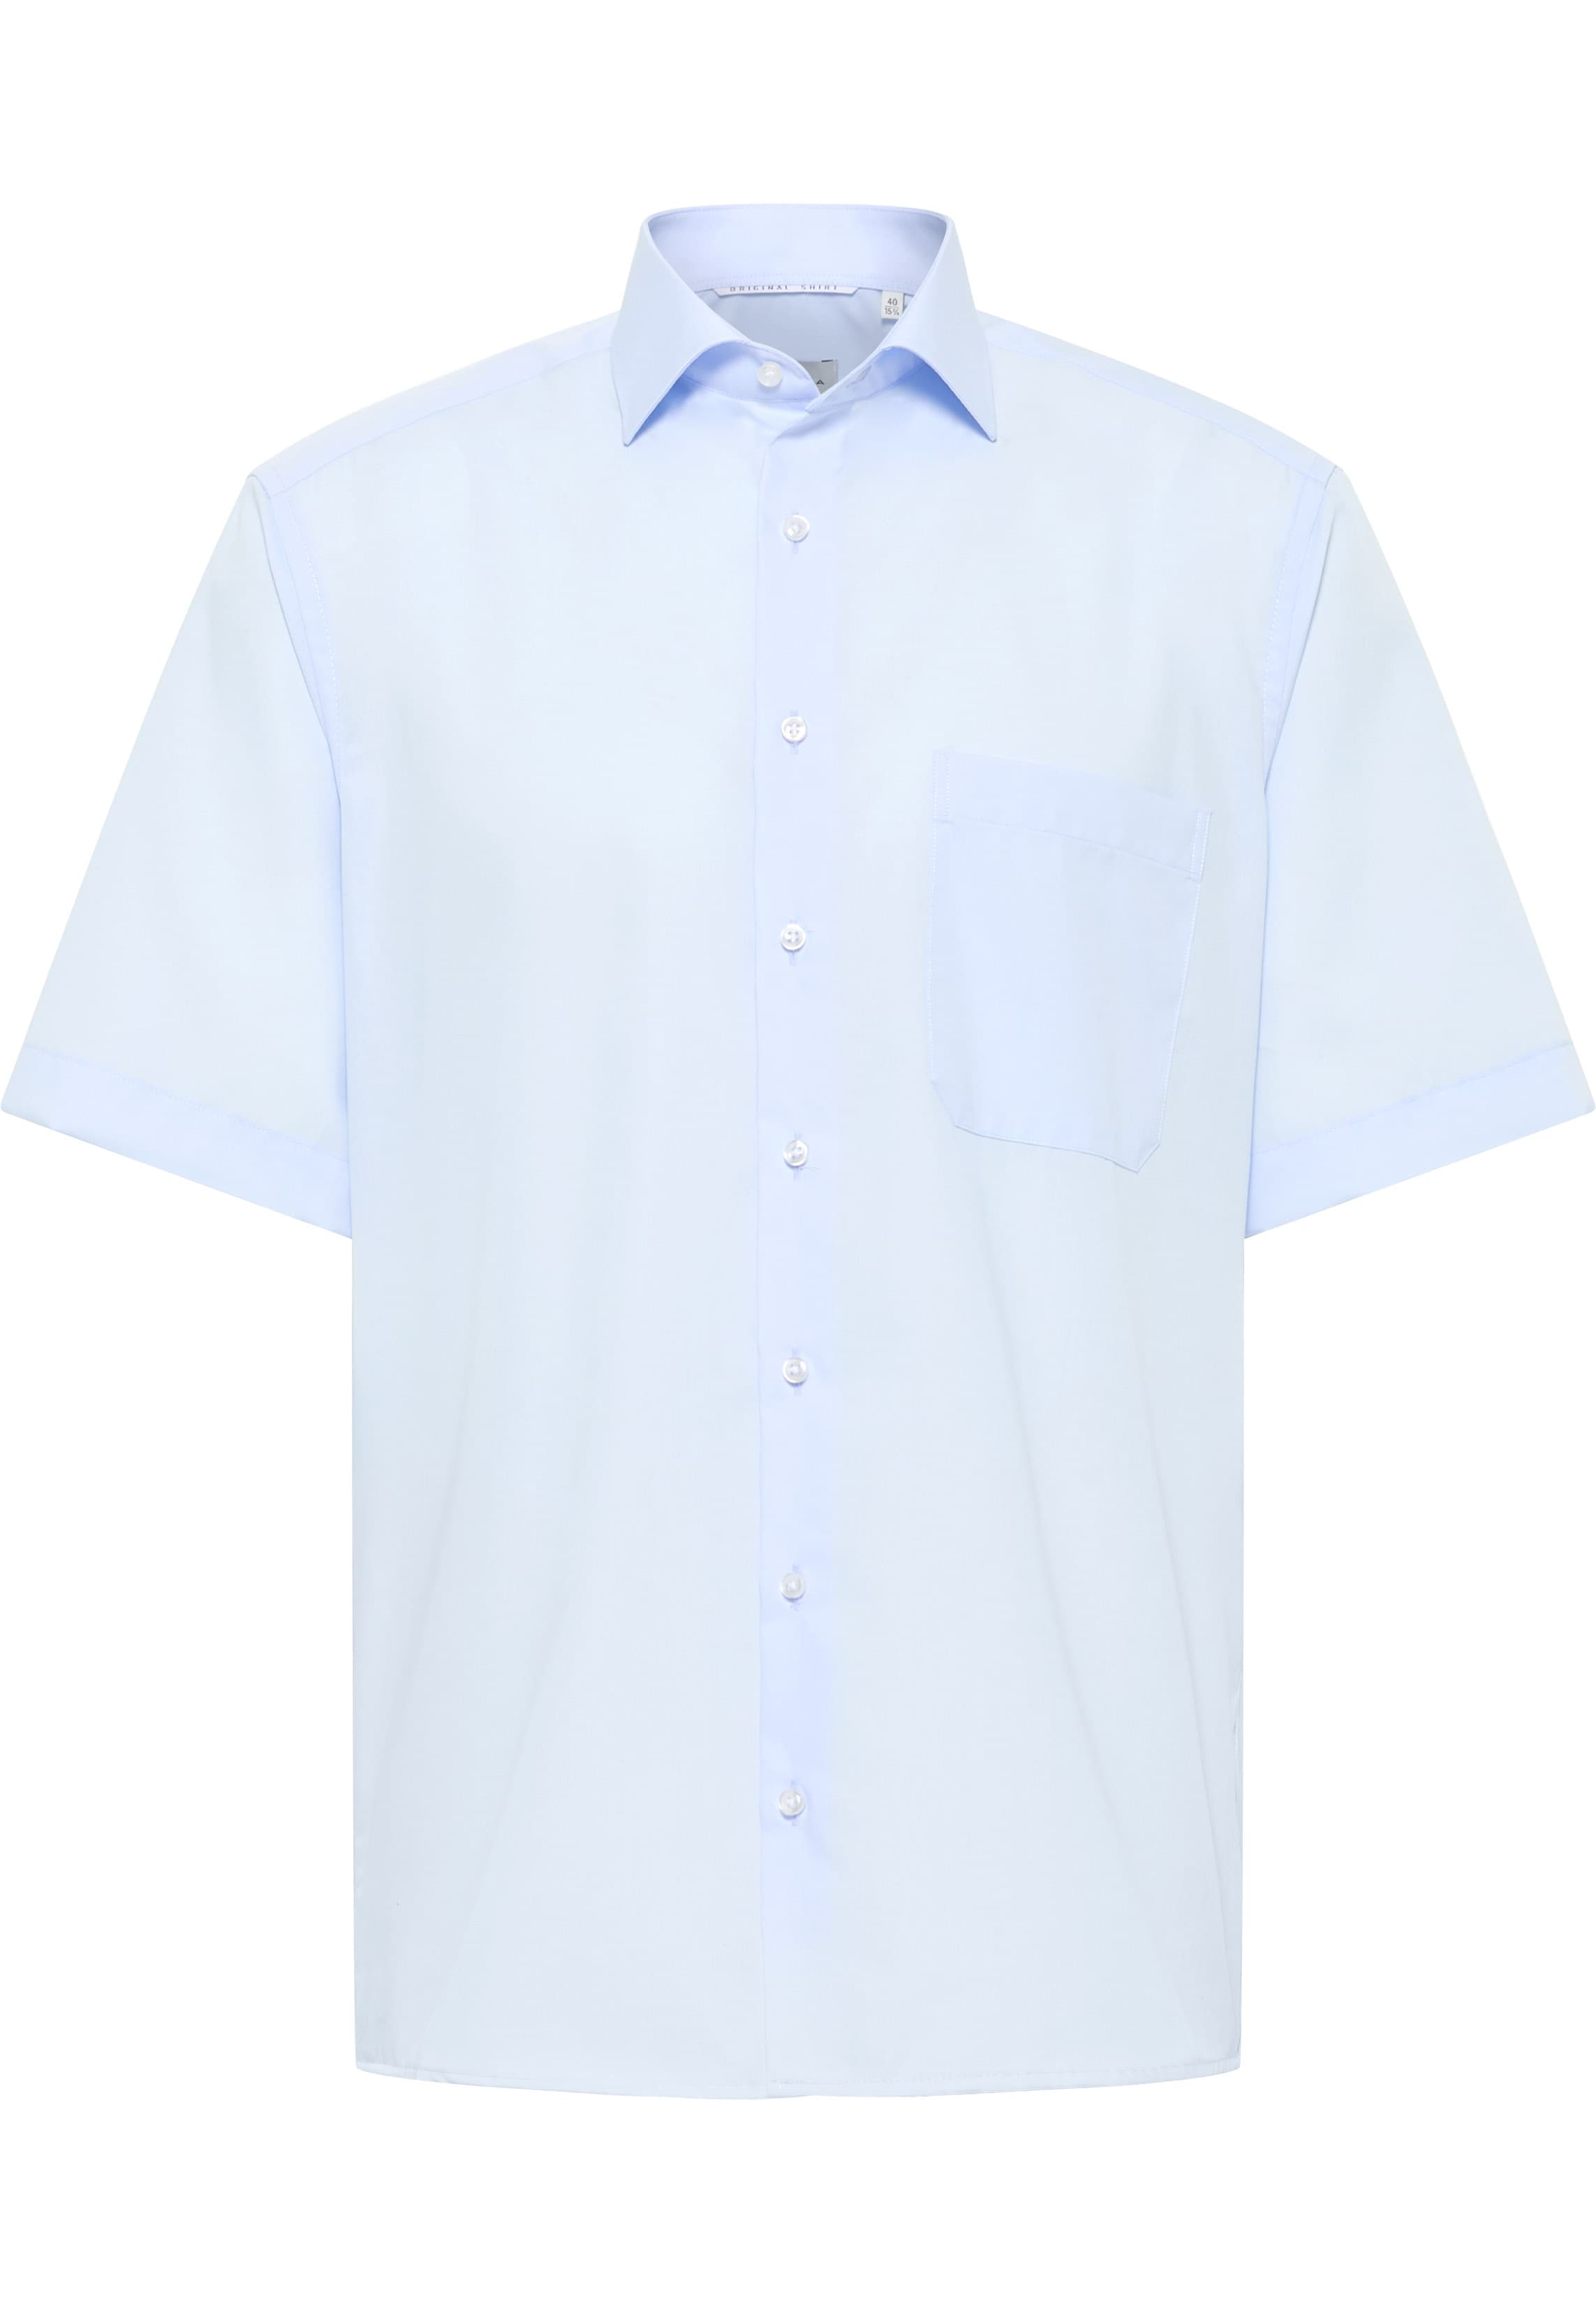 COMFORT FIT Original Shirt bleu clair uni